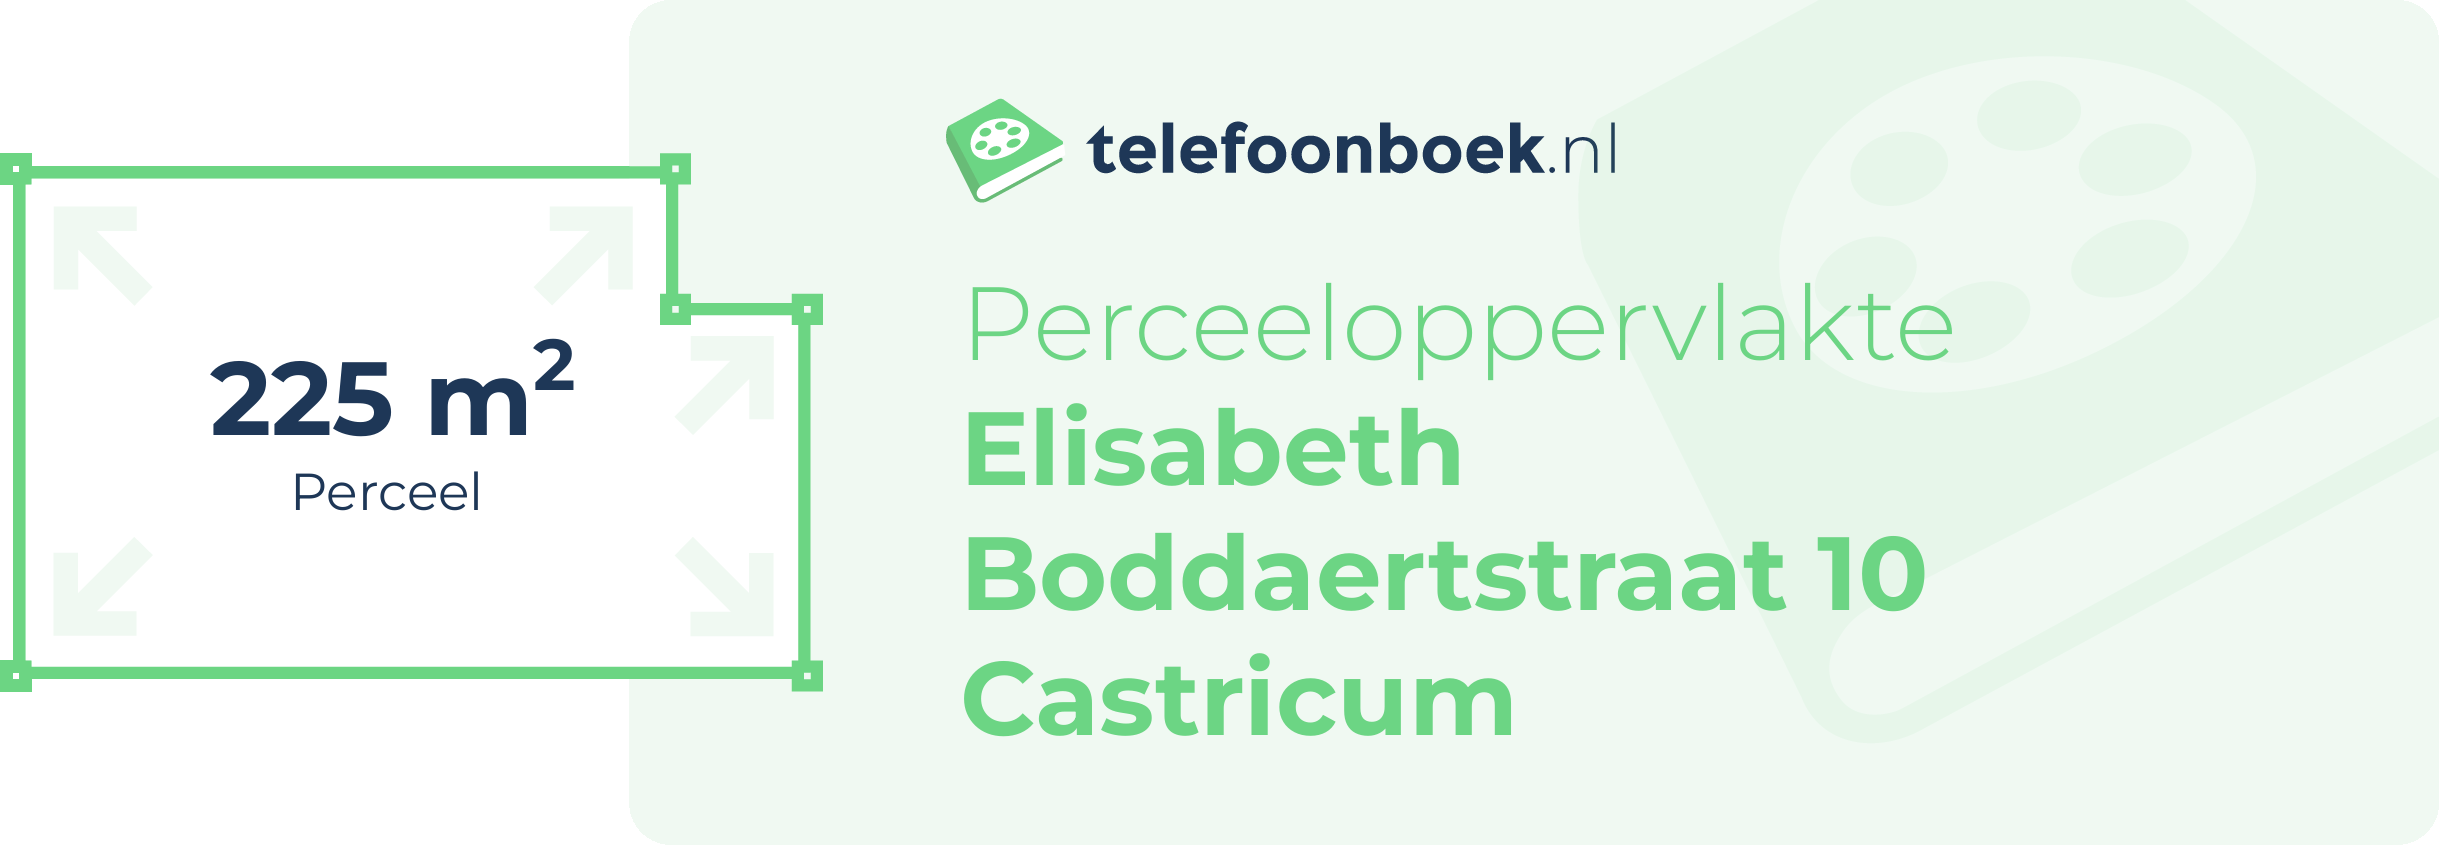 Perceeloppervlakte Elisabeth Boddaertstraat 10 Castricum